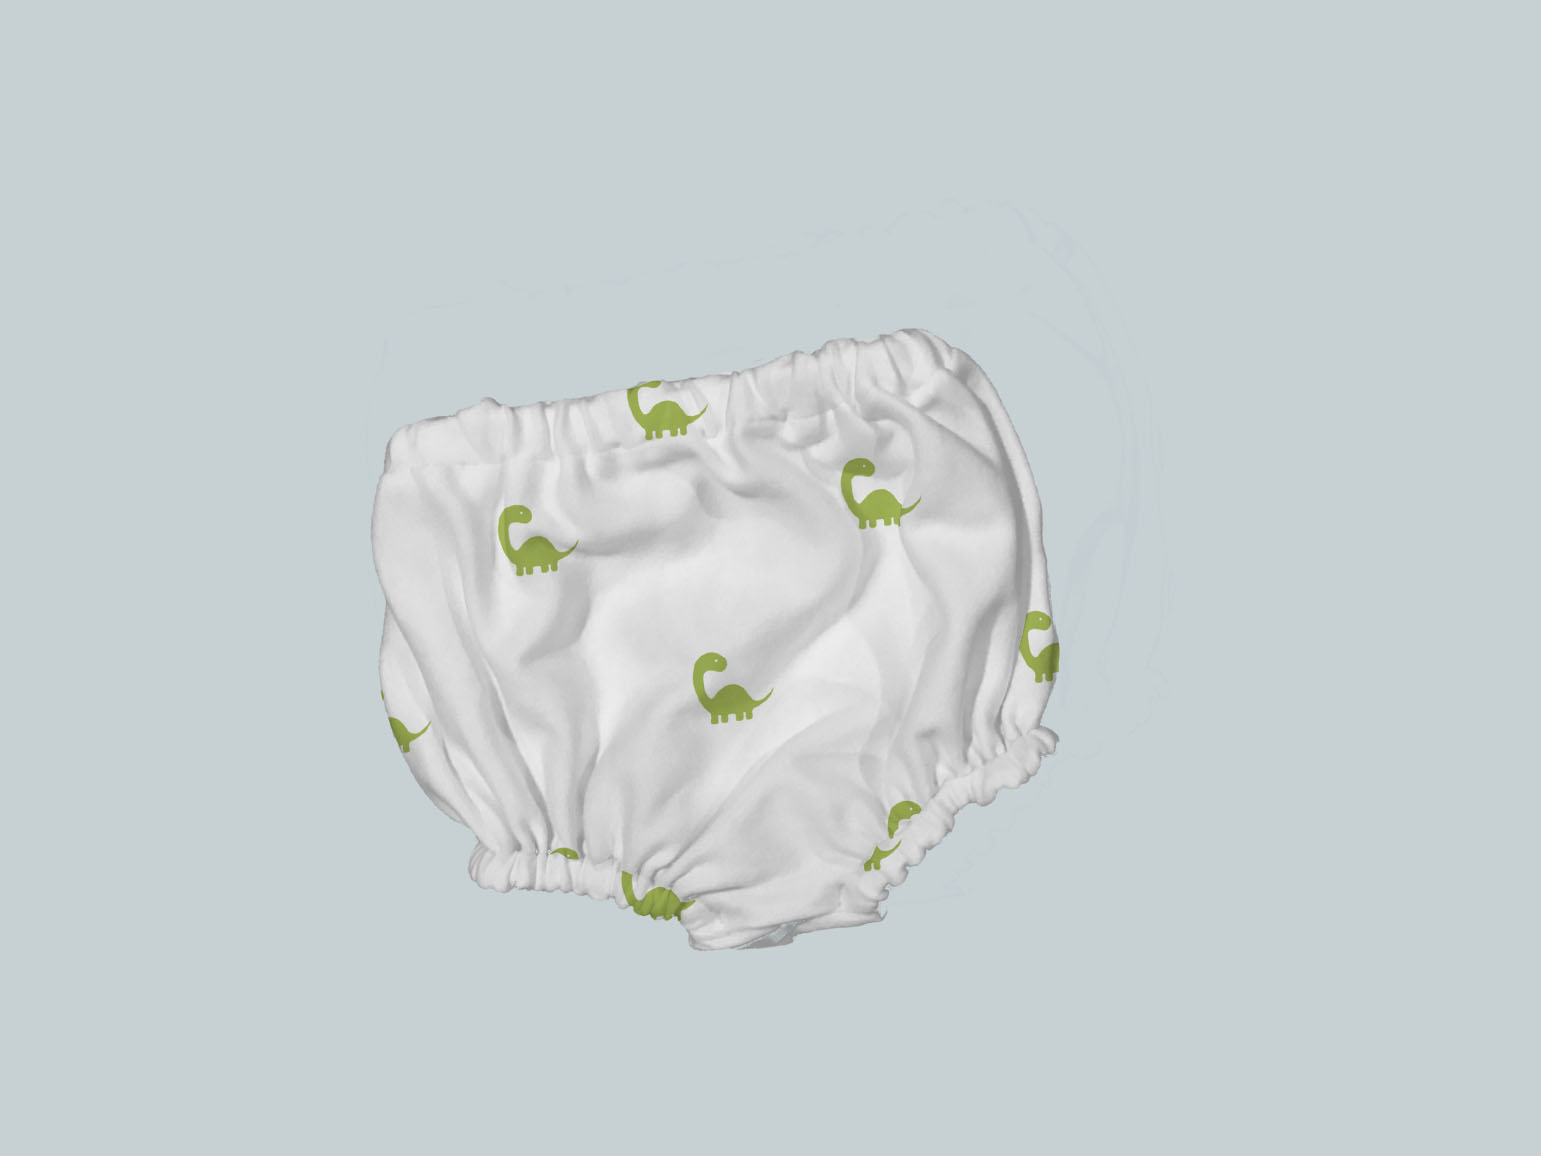 Bummies/Diaper Cover - Tiny Dino